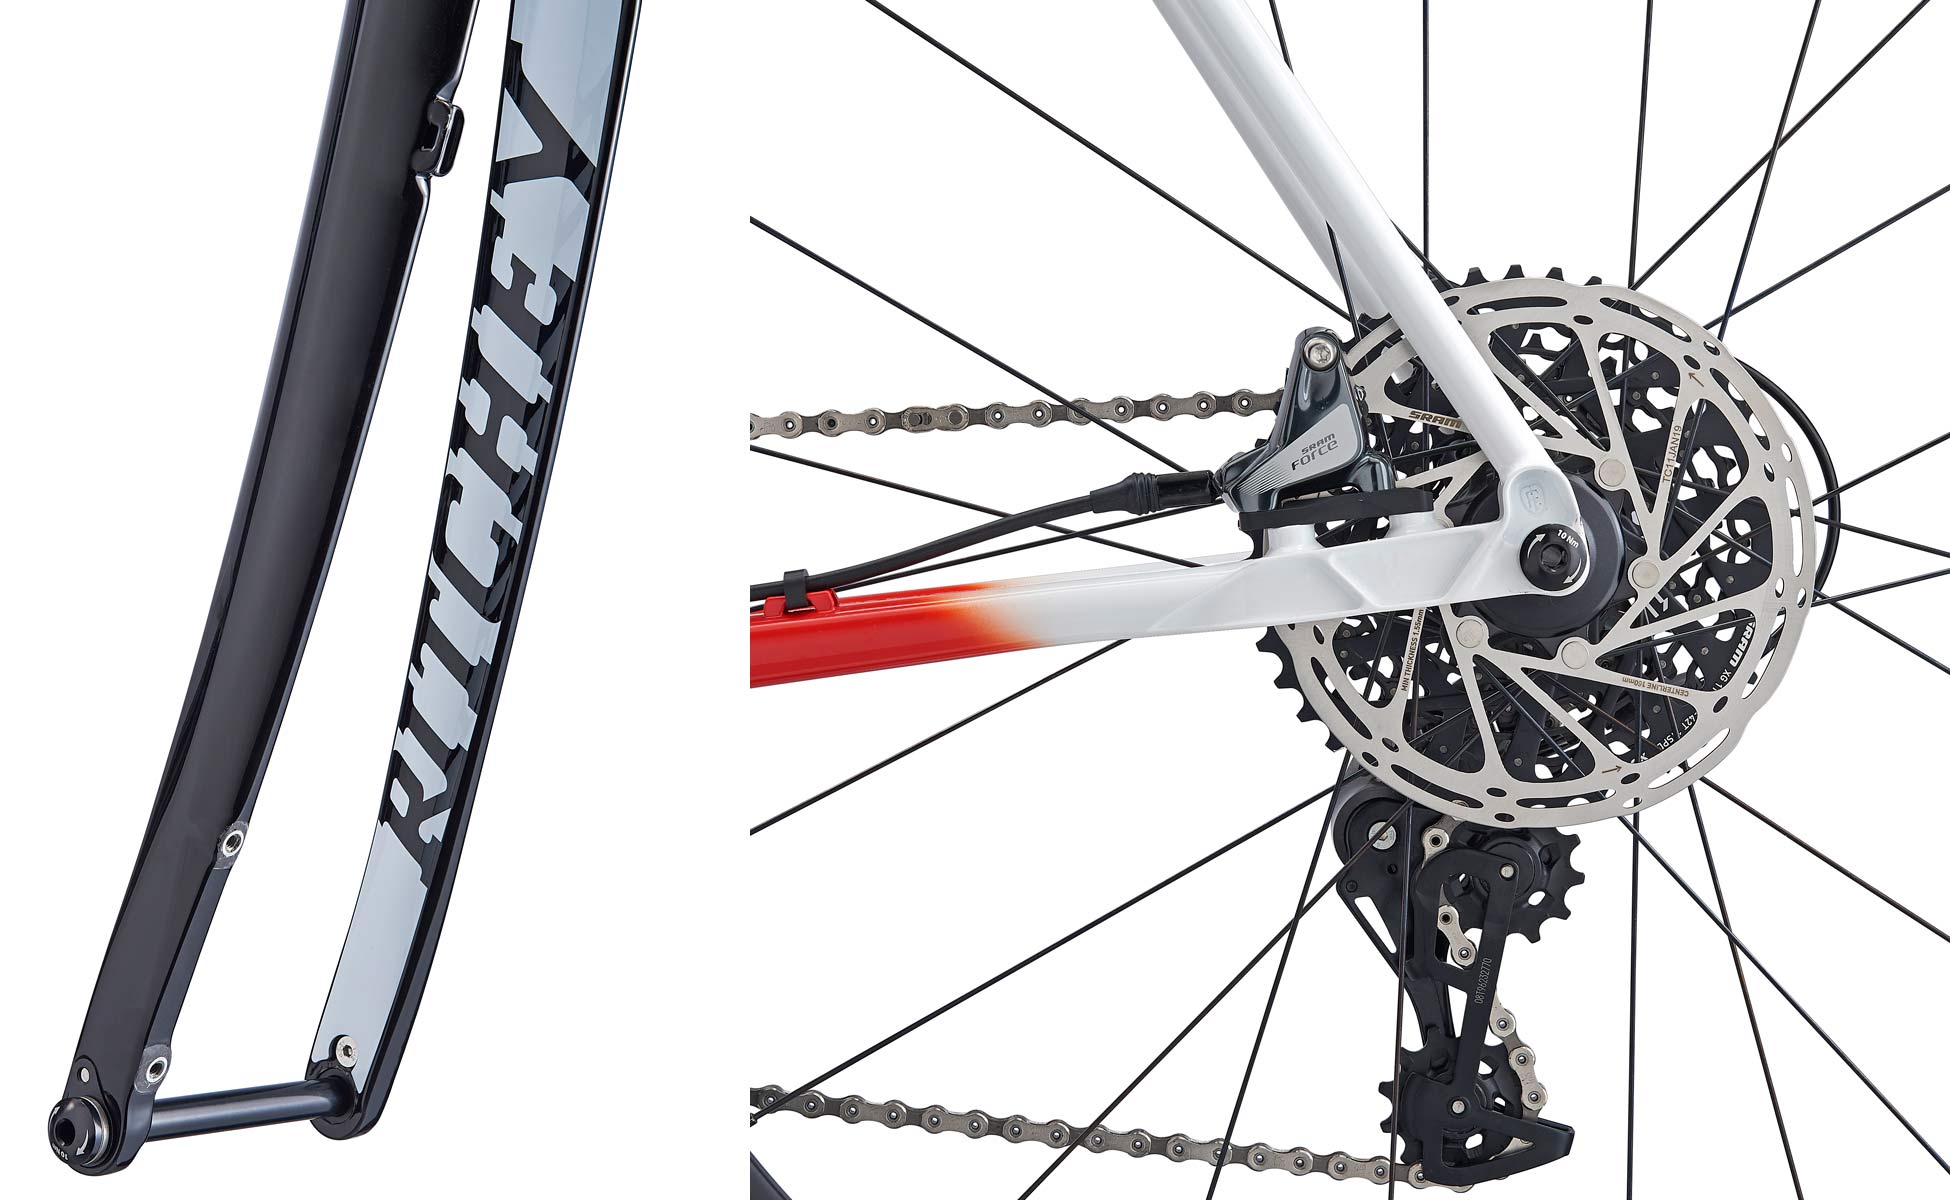 Ritchey Swiss Cross limited edition modern disc-brake steel cyclocross bike CX